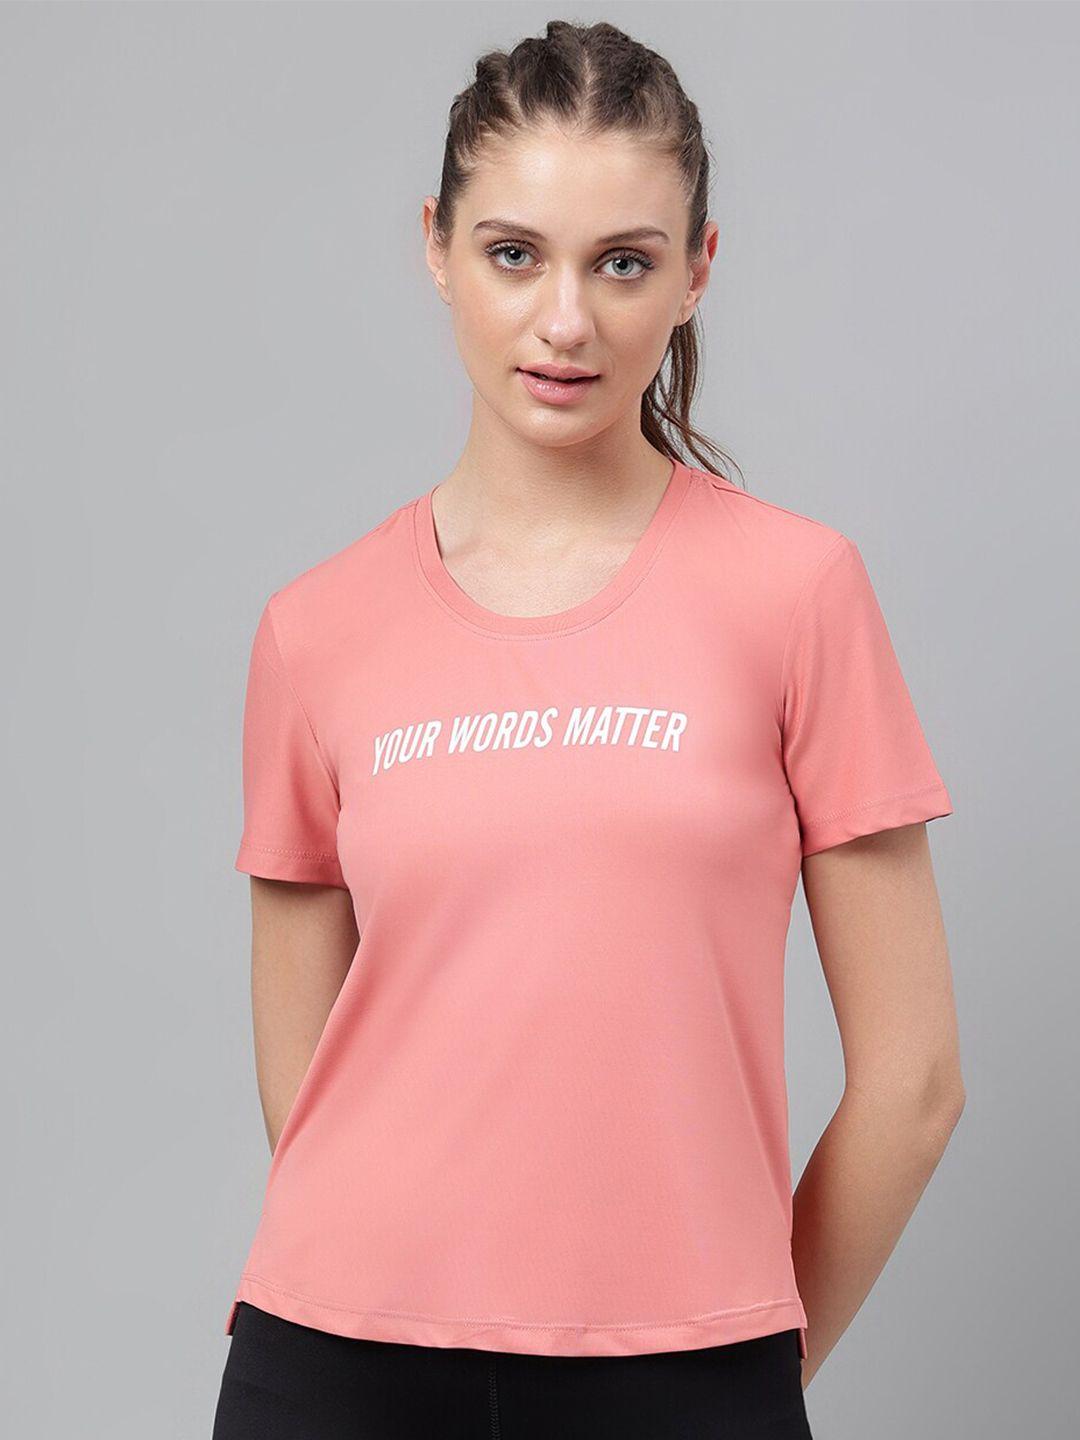 mkh  dri-fit typography printed round neck sports t-shirt